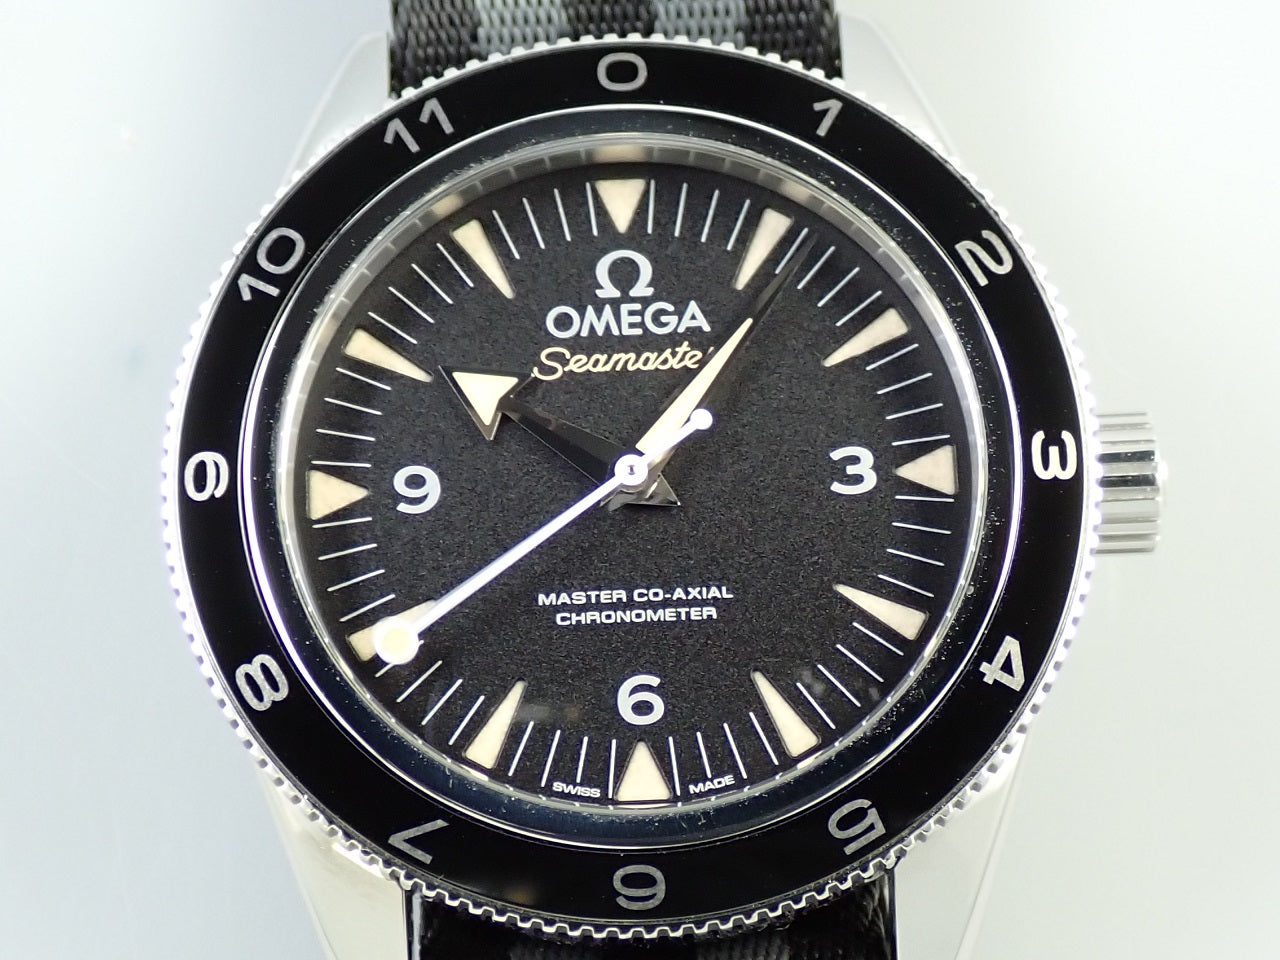 Omega Seamaster 300 Specter &lt;Warranty, Box, etc.&gt;